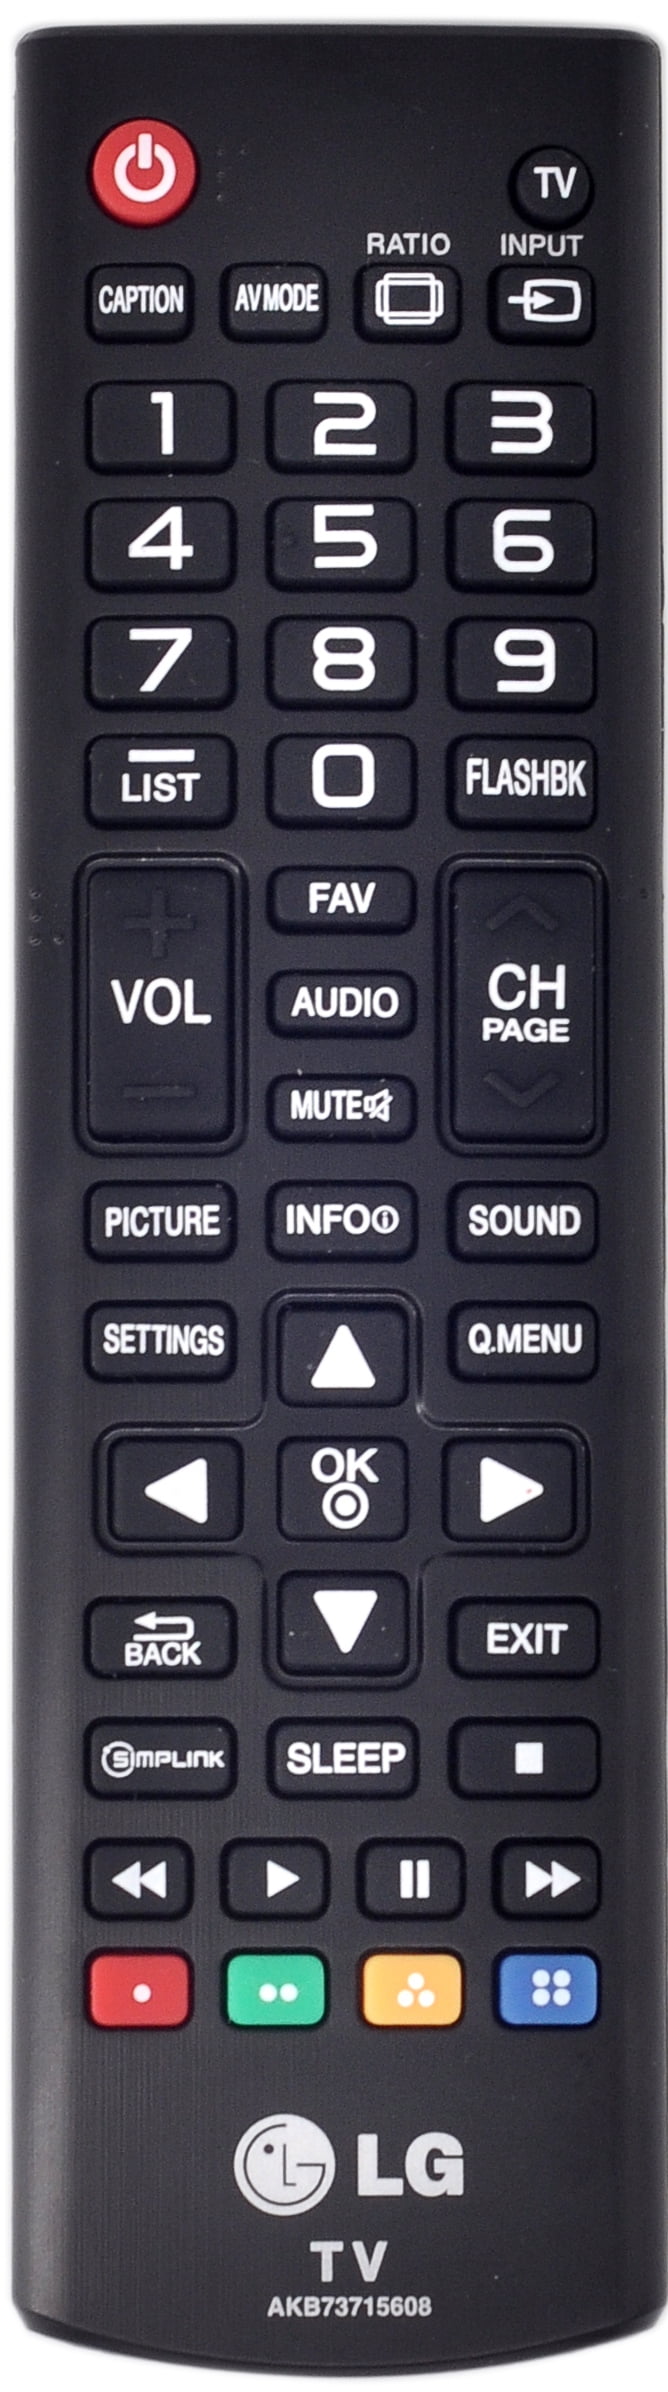 Remote Control for LG TV HB954SAAP LHB953 MKJ42519617 